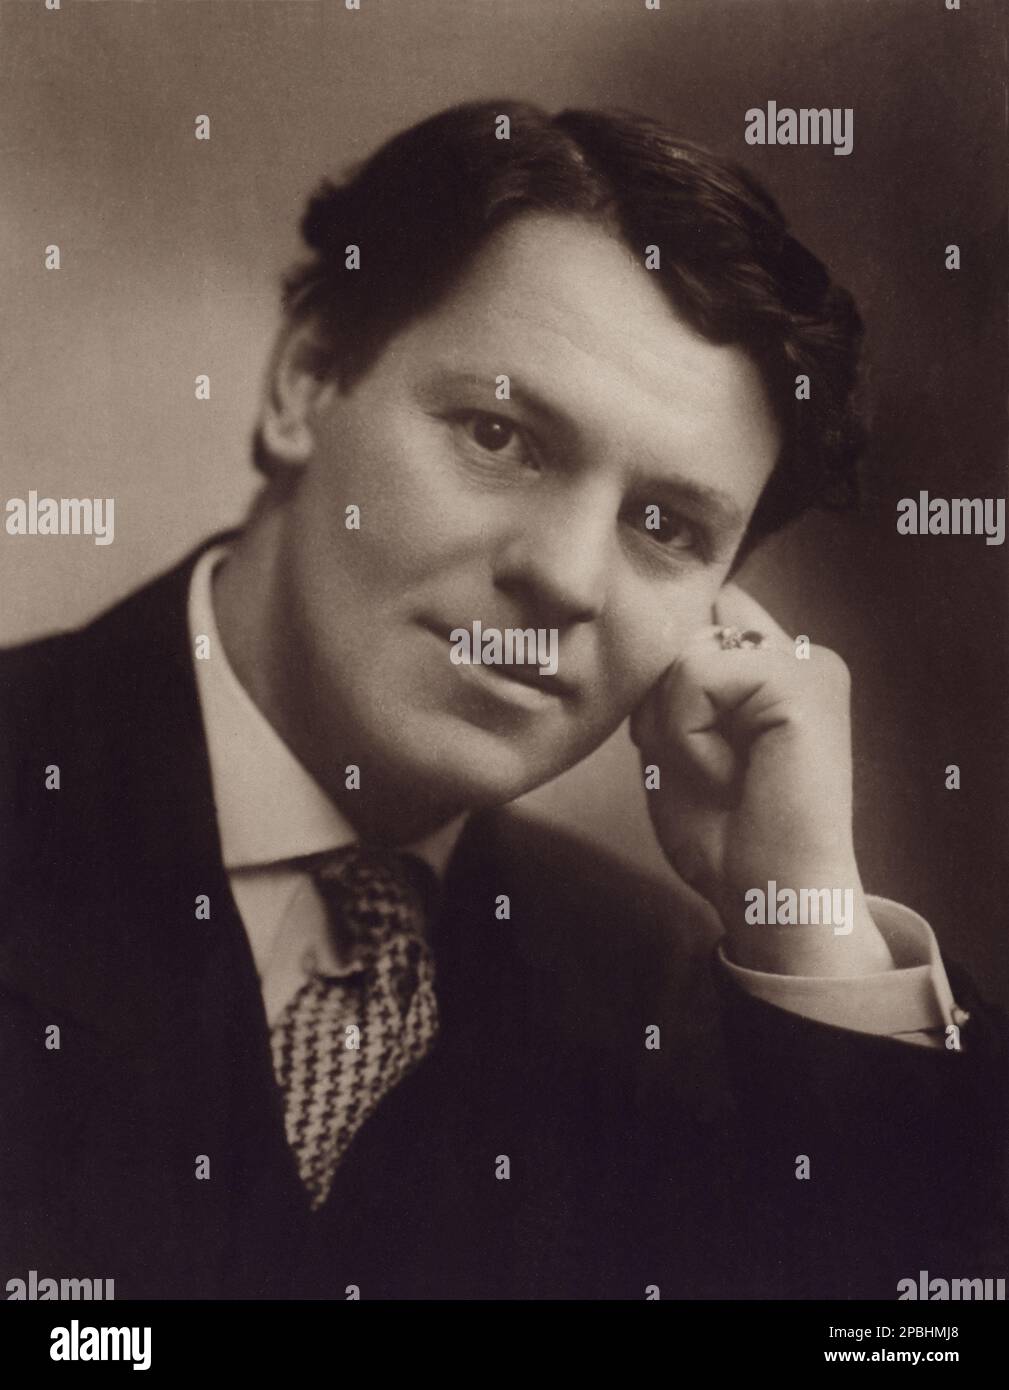 1920 ca,  Germany : The german-albanian theatre actor  ALEXANDER MOISSI ( 1879 - 1935 ). Photo by A. Mocsigay , Hamburg .  - Aleksander Moisiu - TEATRO - THEATER - THEATRE - Avanguardi - Avantgarde - attore teatrale -  tie - cravatta - collar - colletto   ----  Archivio GBB Stock Photo